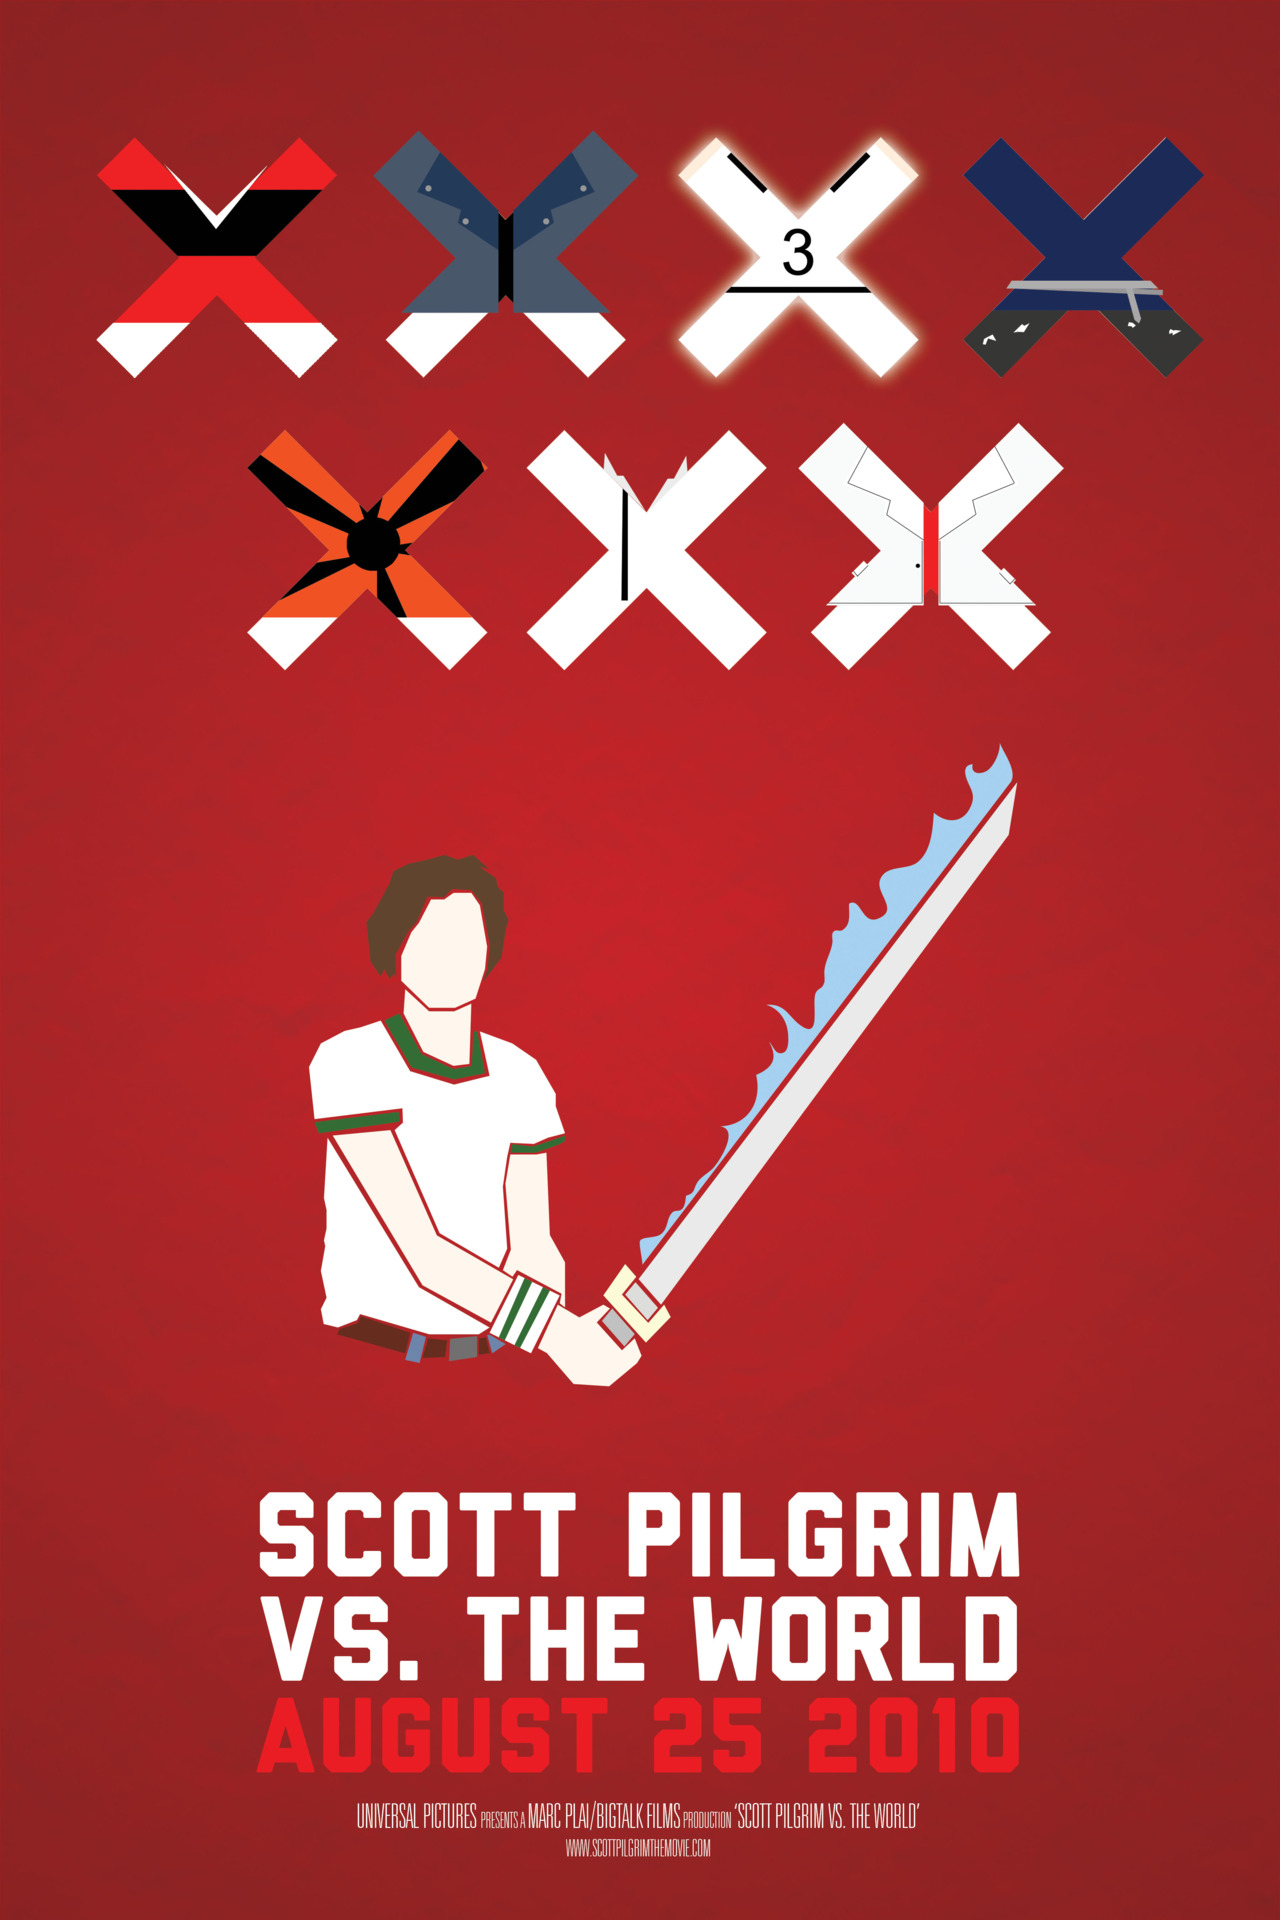 Scott Pilgrim Vs. the World on DVD/Blu-ray 11-9-10